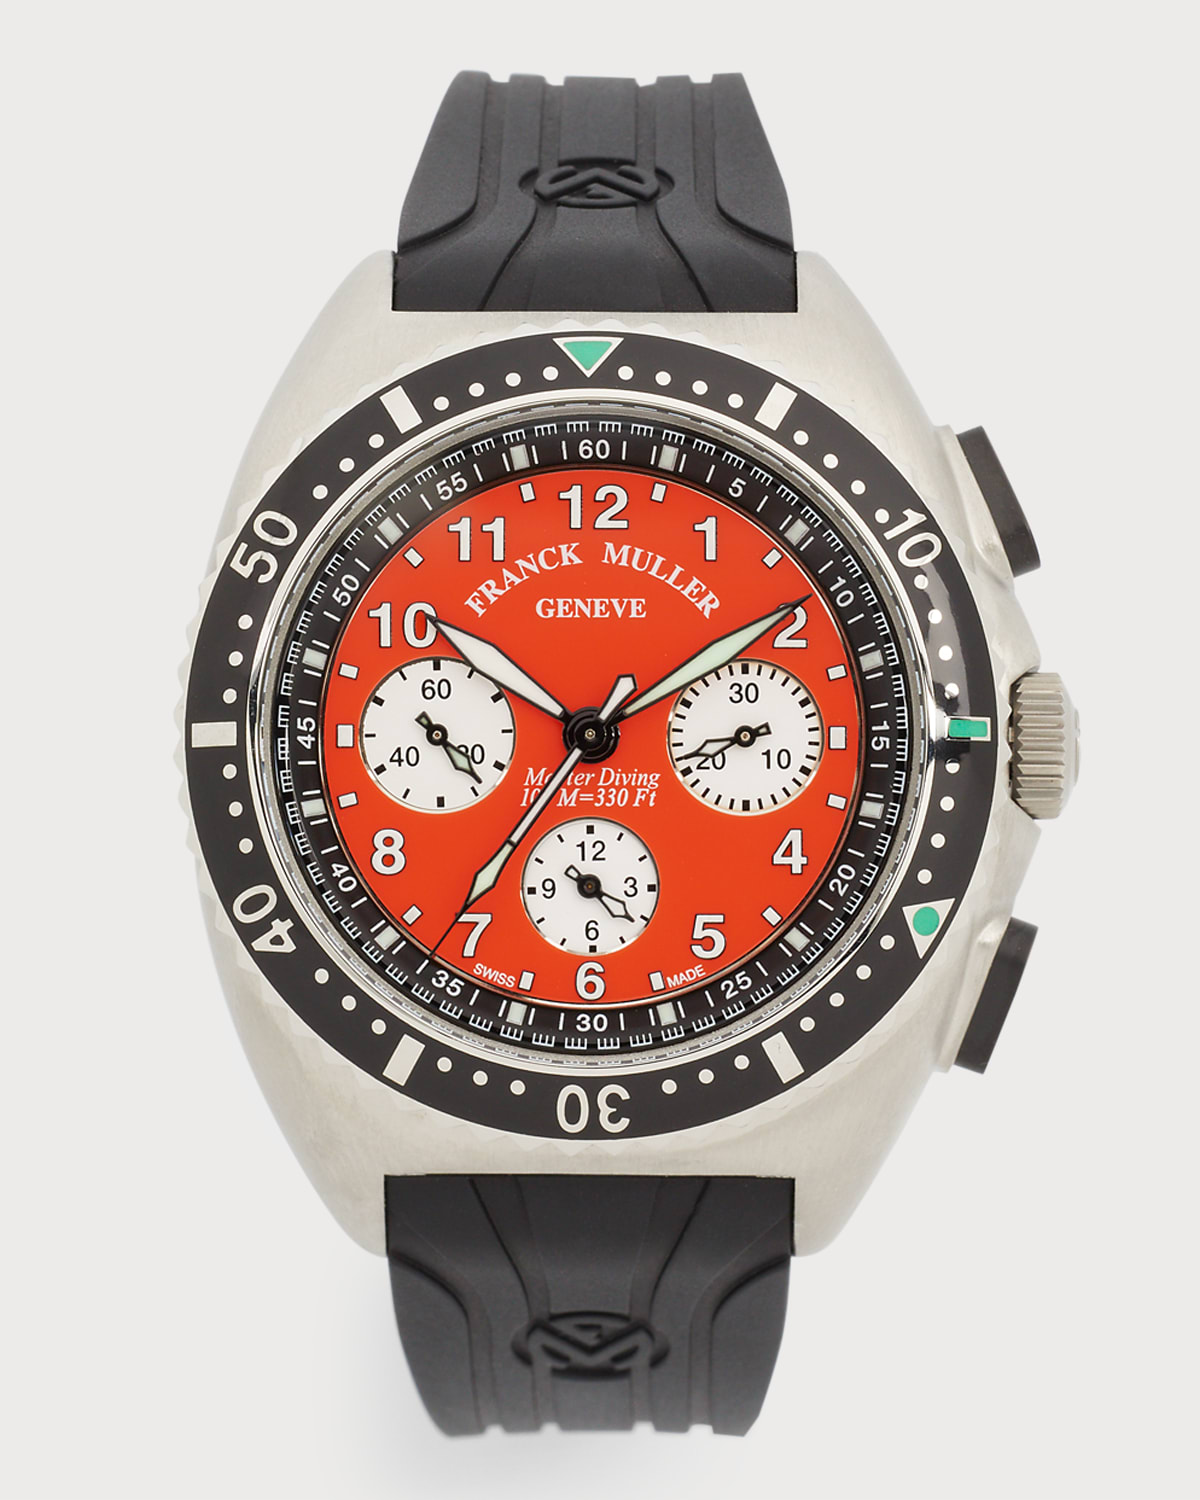 Franck Muller Master Diving Chronograph Watch W/ Rotating Bezel, Orange/black